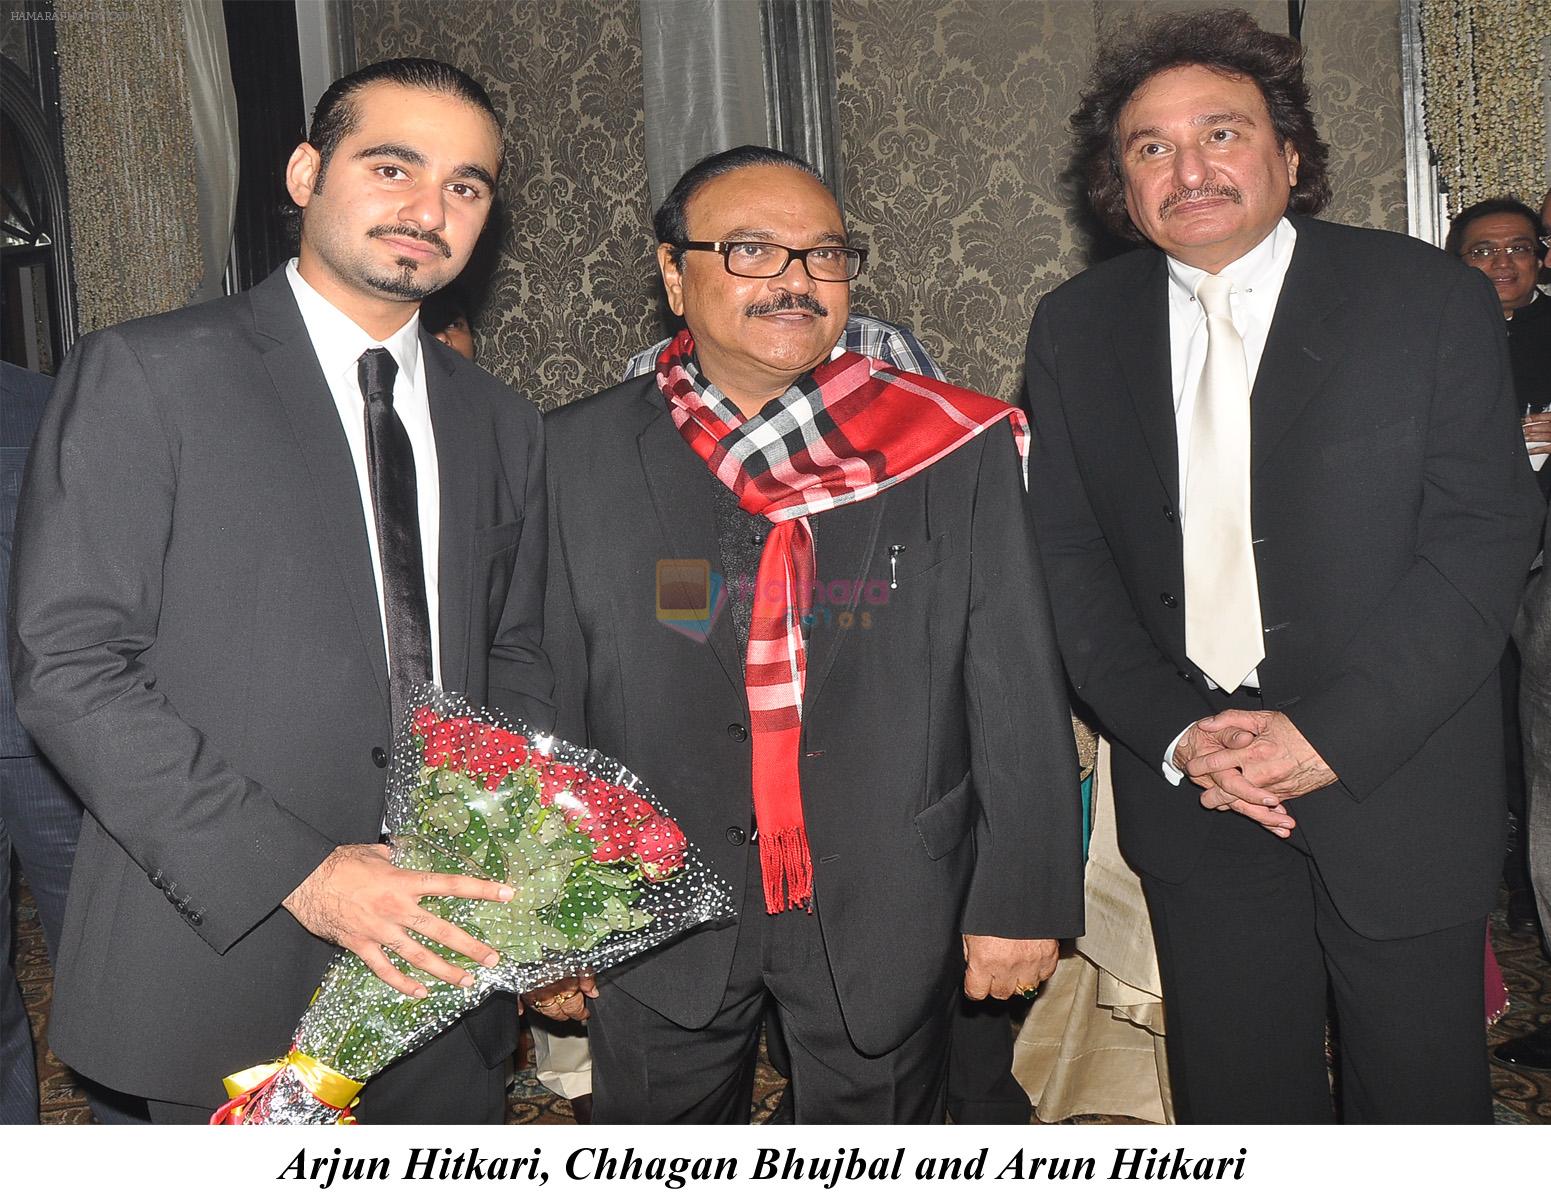 Arjun Hitkari, Chhagan Bhujbal and Arun Hitkari at the Engagement ceremony of Arjun Hitkari with Gayatri on 19th April 2012